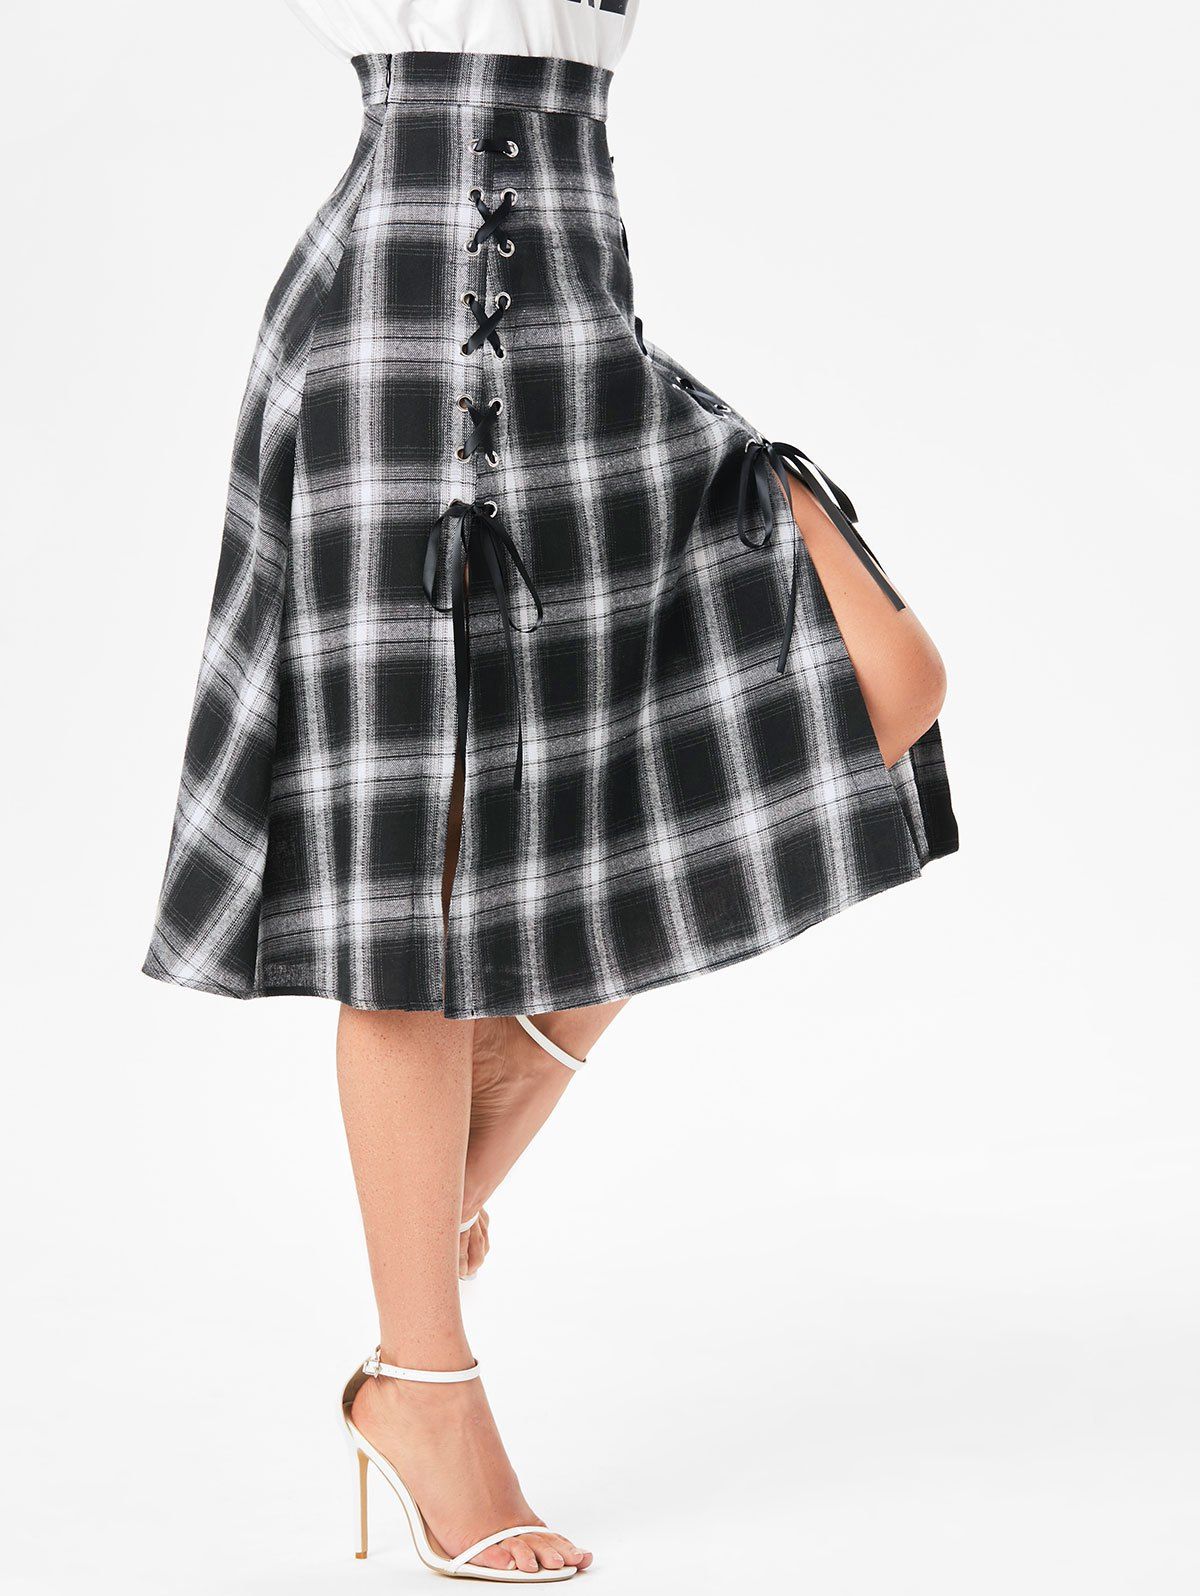 Plaid Print Lace Up Split Skirt - BLACK M